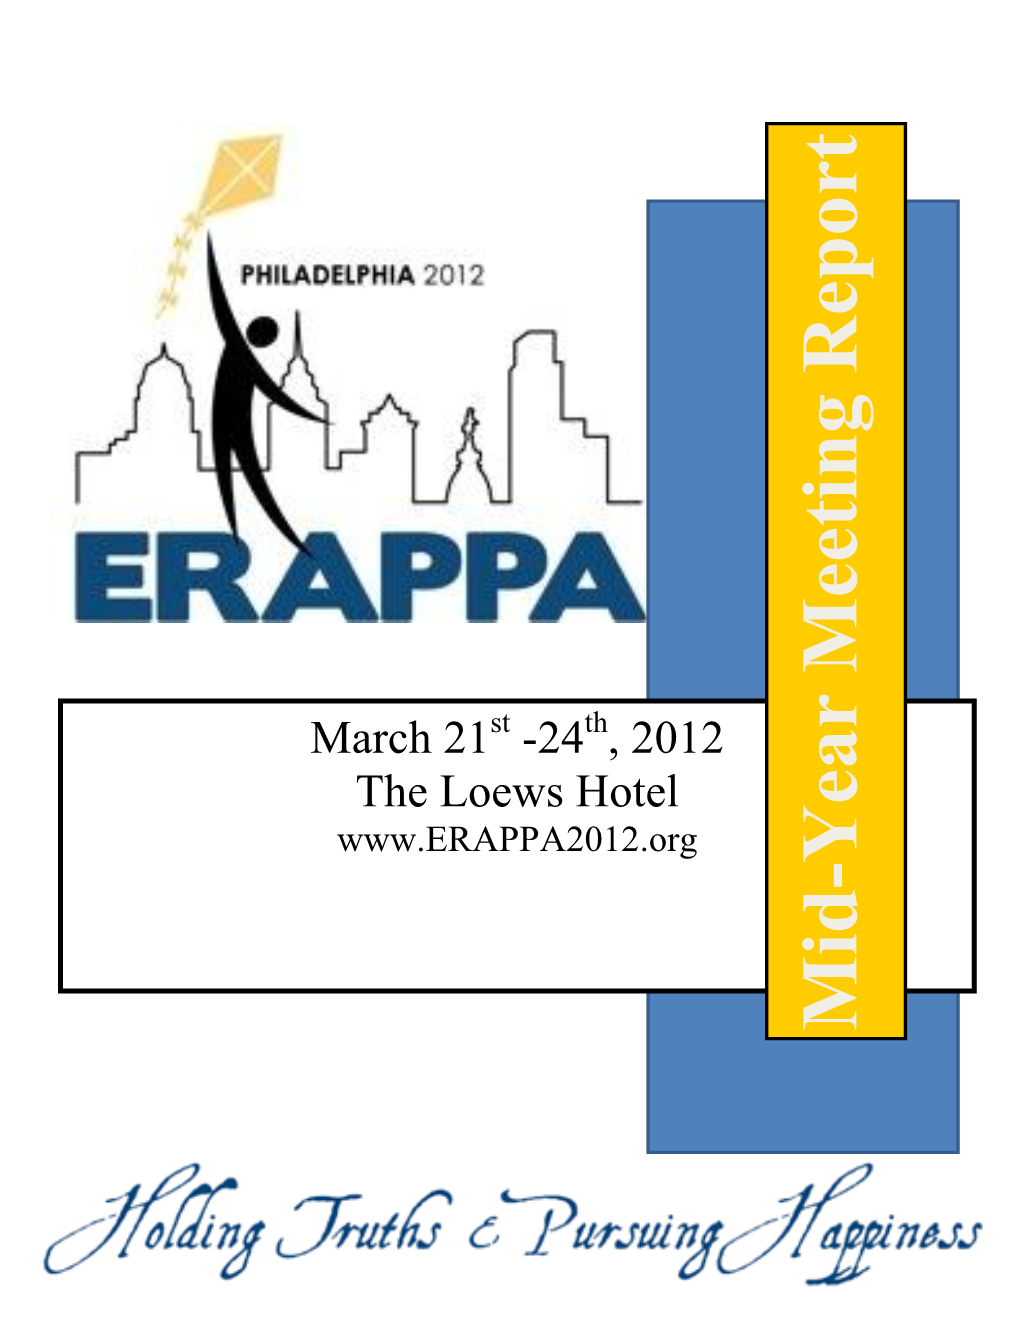 ERAPPA 2010 Planning Meeting